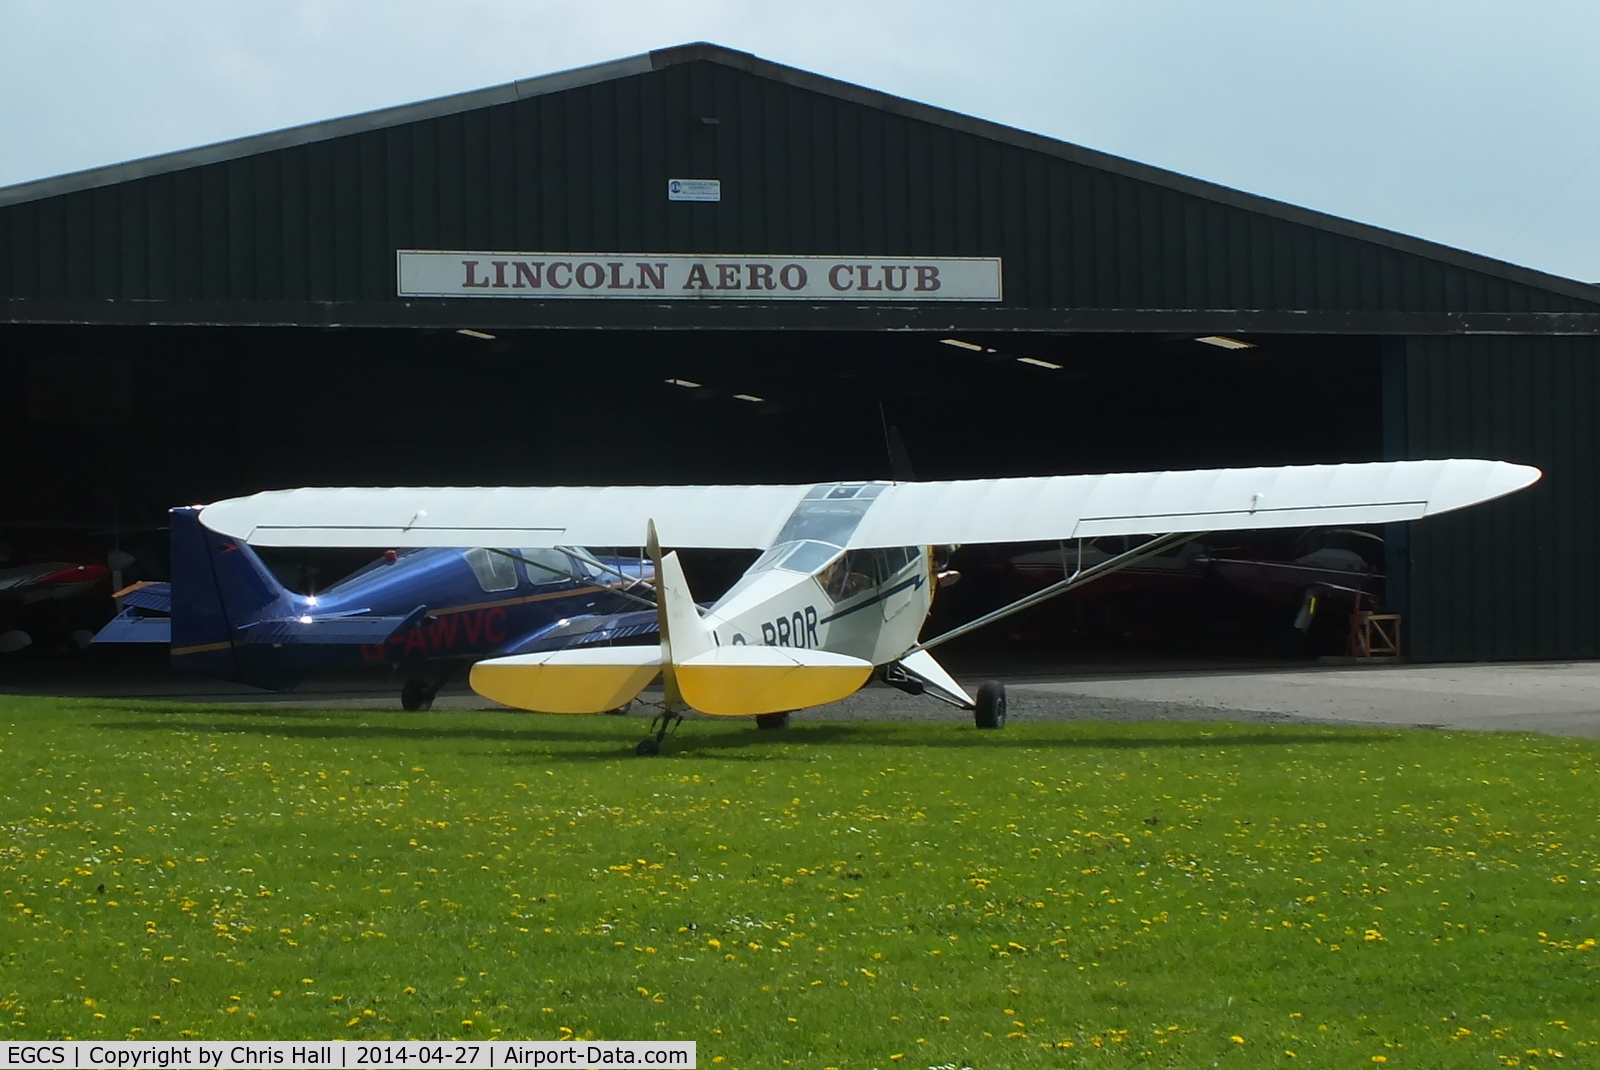 Sturgate Airfield Airport, Lincoln, England United Kingdom (EGCS) - Lincoln Flying Club hangar at Stugate